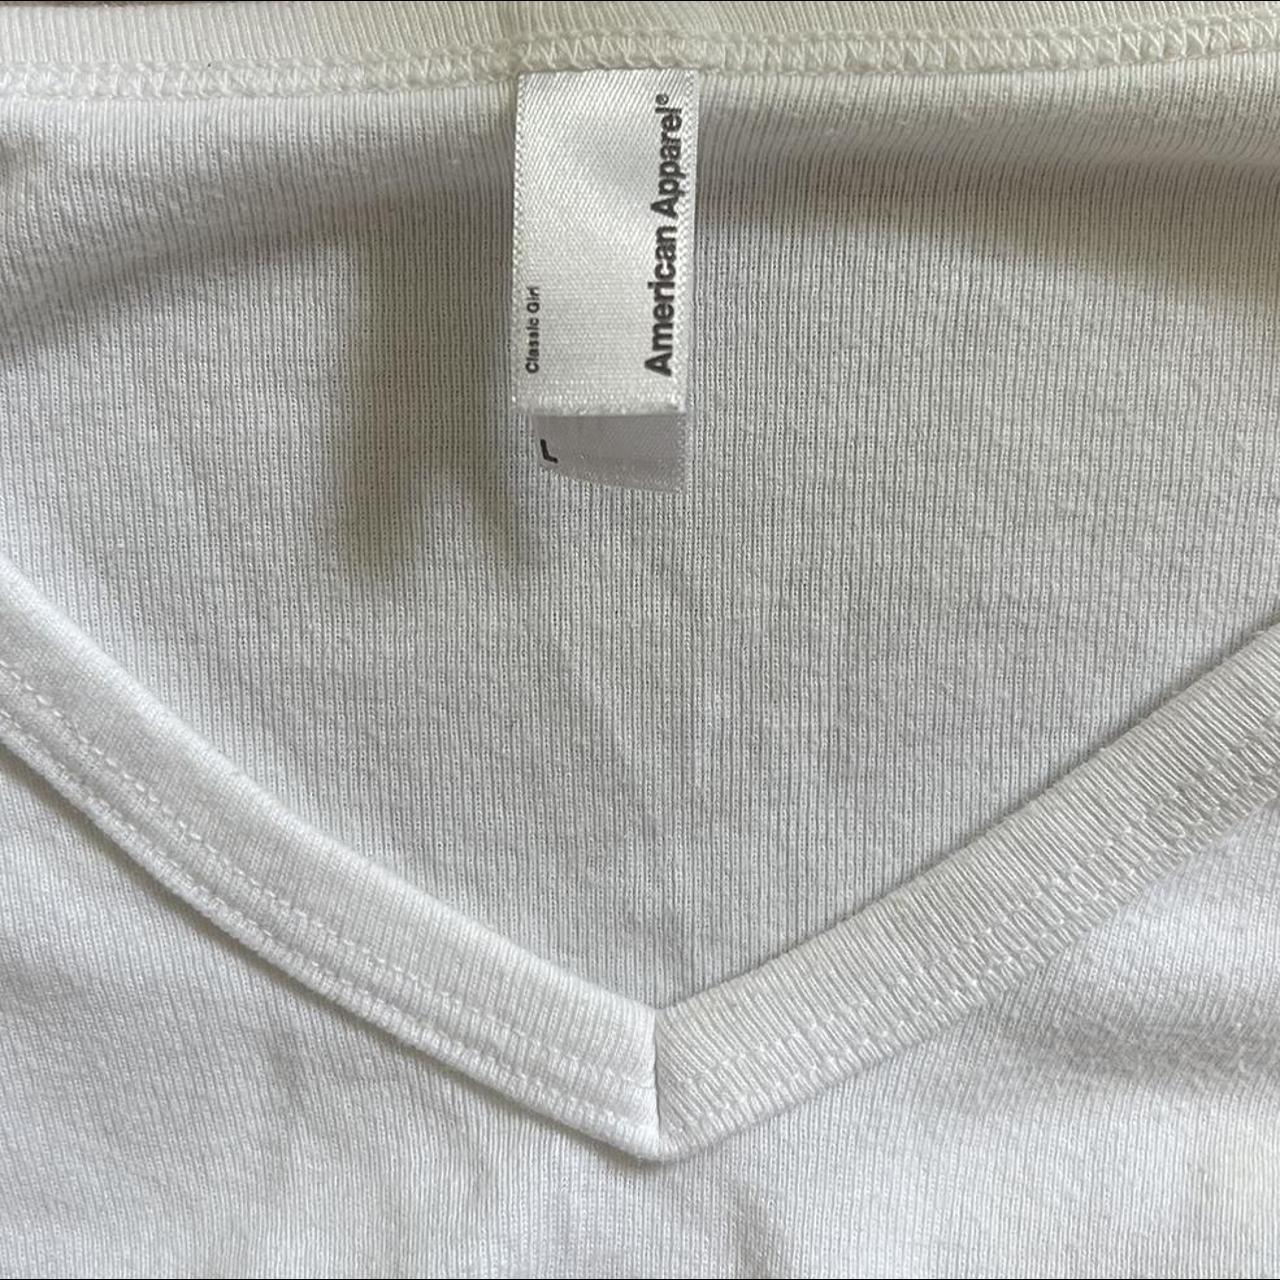 American Apparel Women's White Shirt (4)